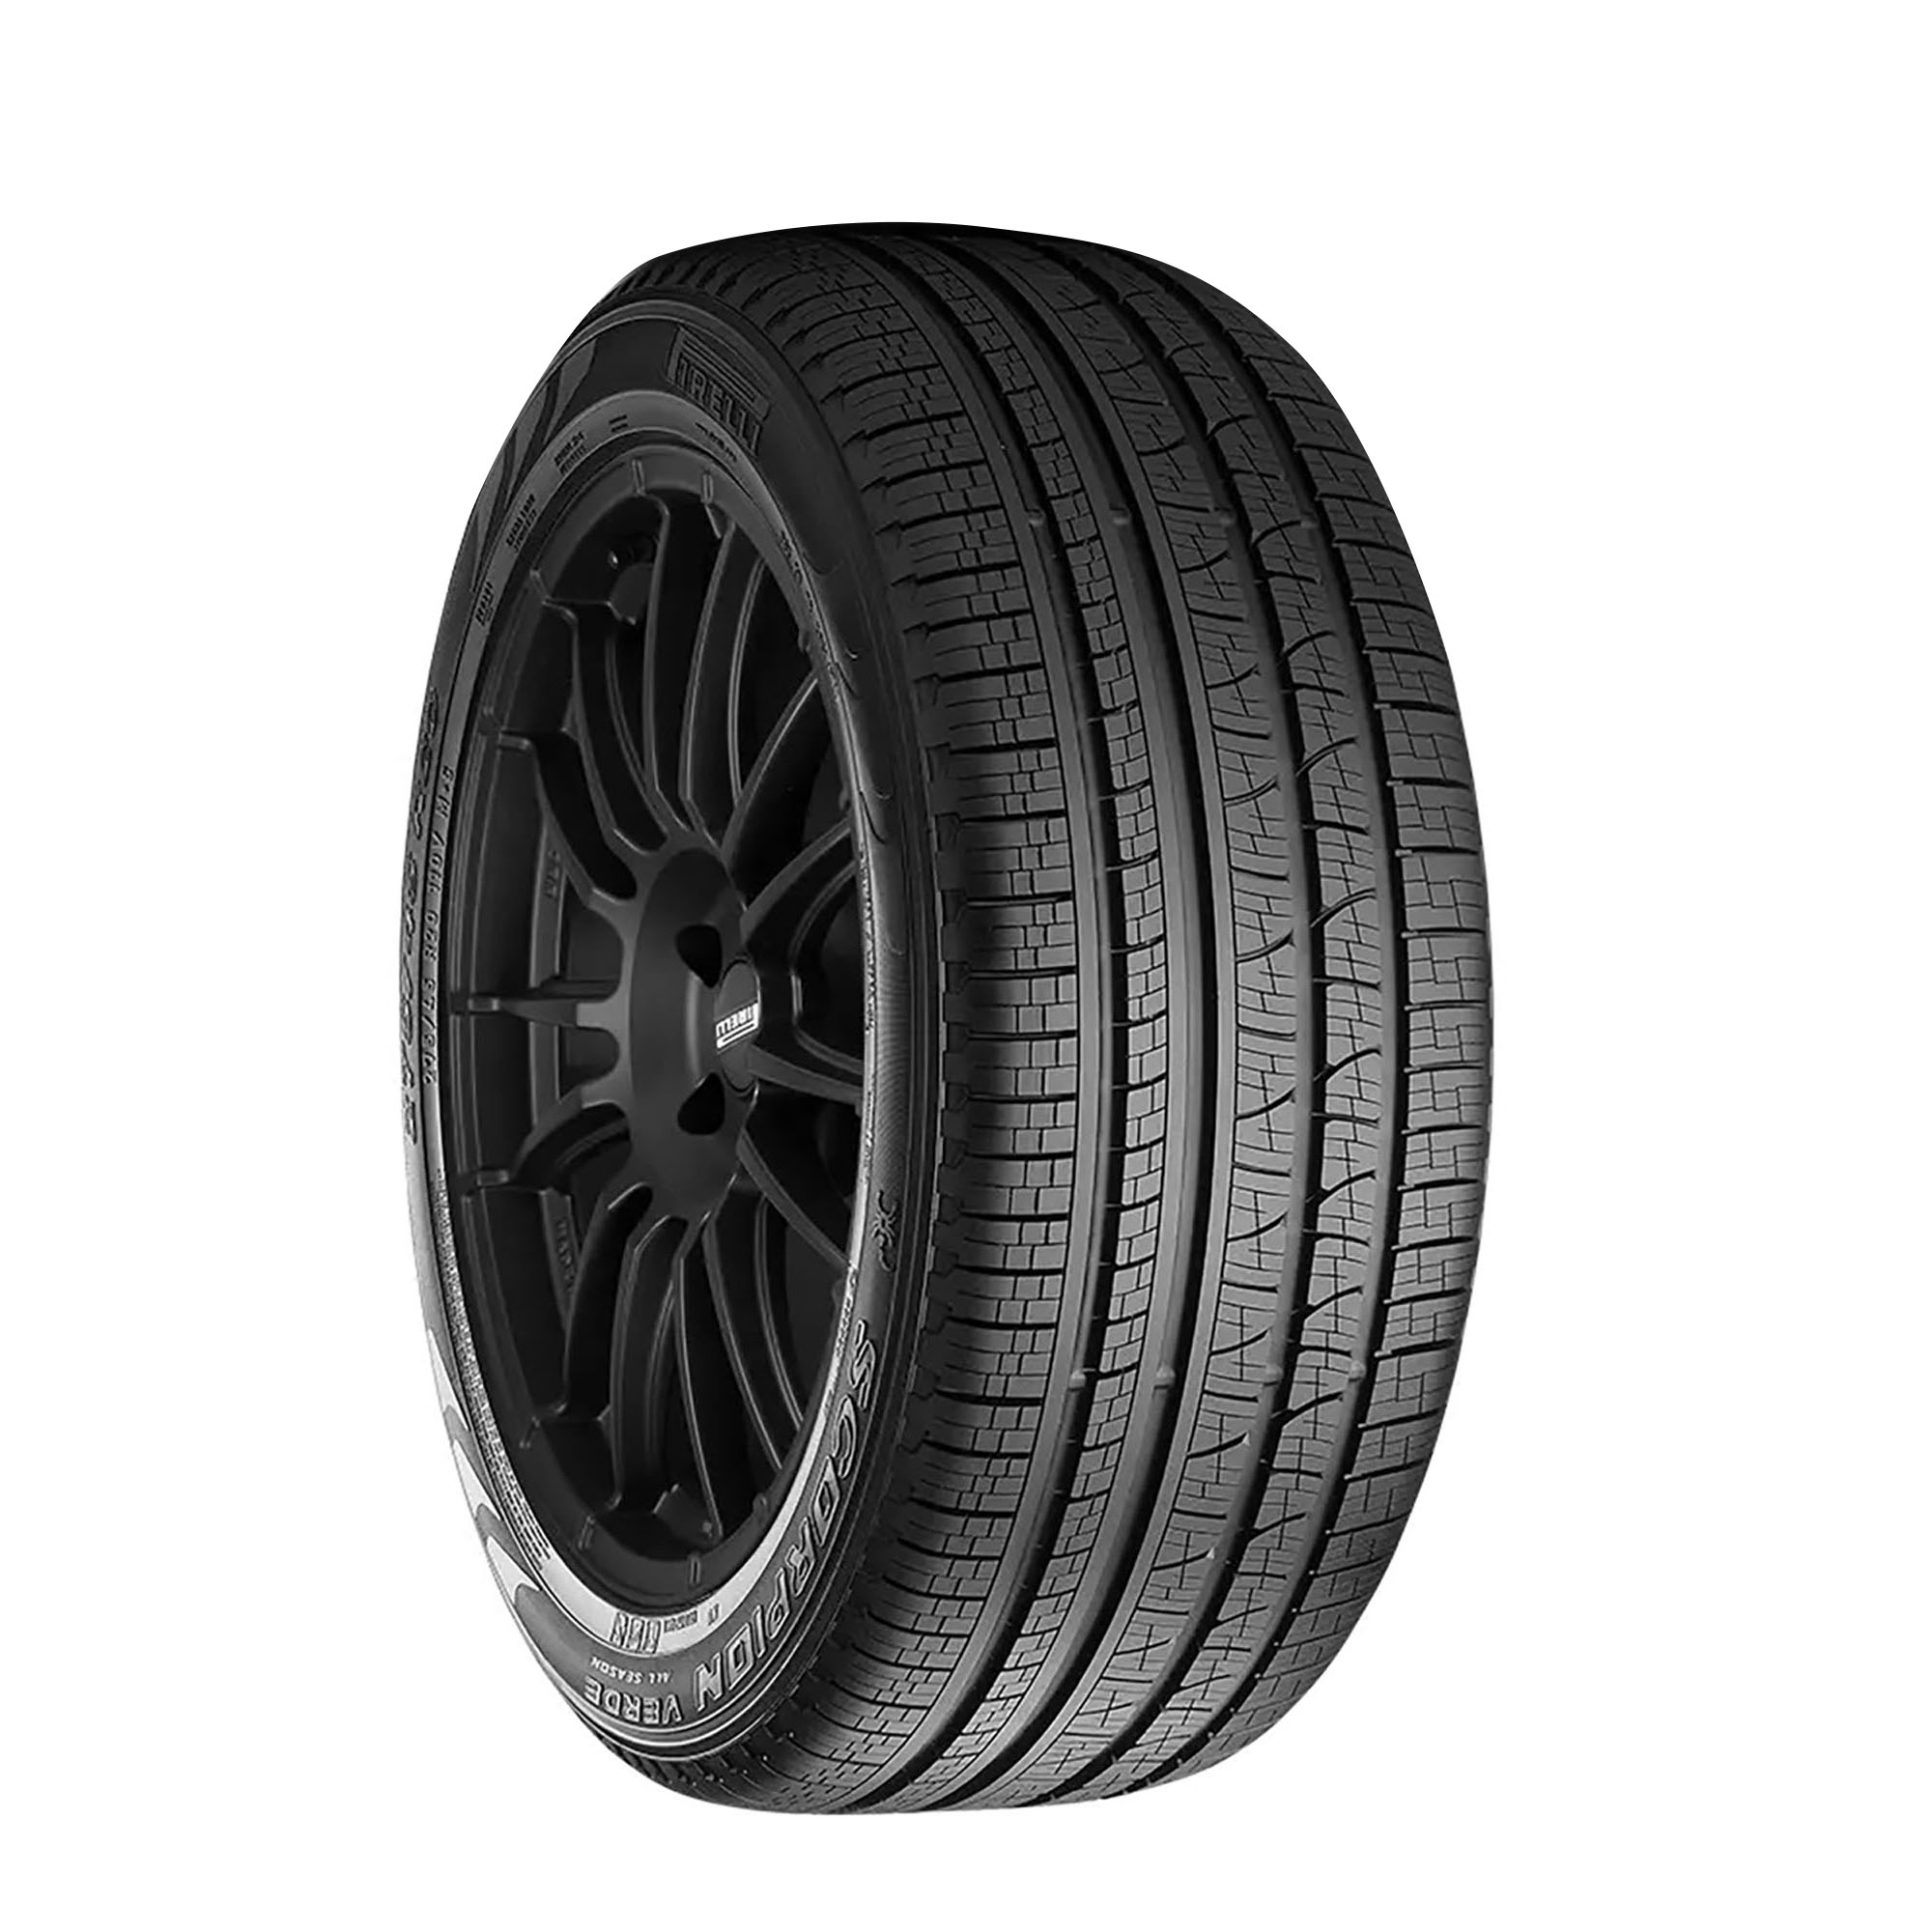 2 New Pirelli Scorpion Verde All Season - 215/65r16 Tires 2156516 215 65 16  | eBay